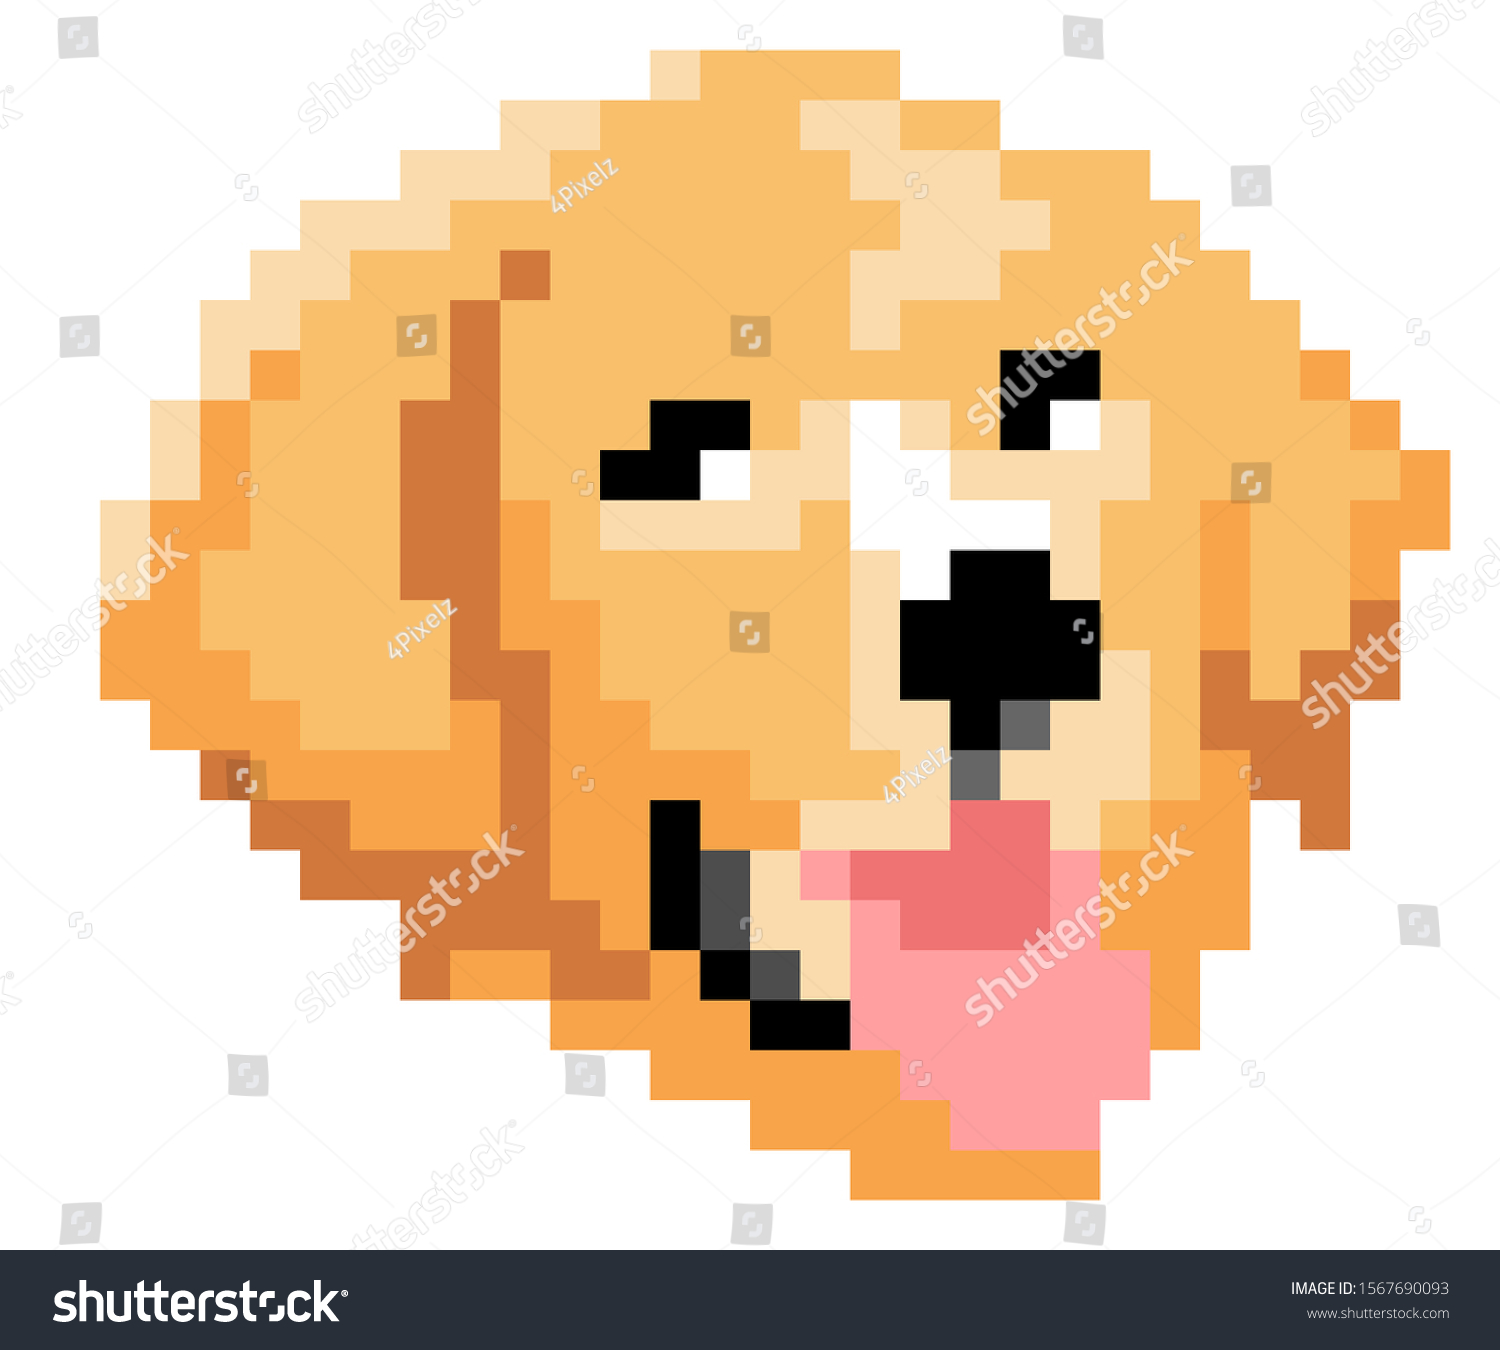 Vector Pixel Art Golden Retriever Dog Stock Vector Royalty Free